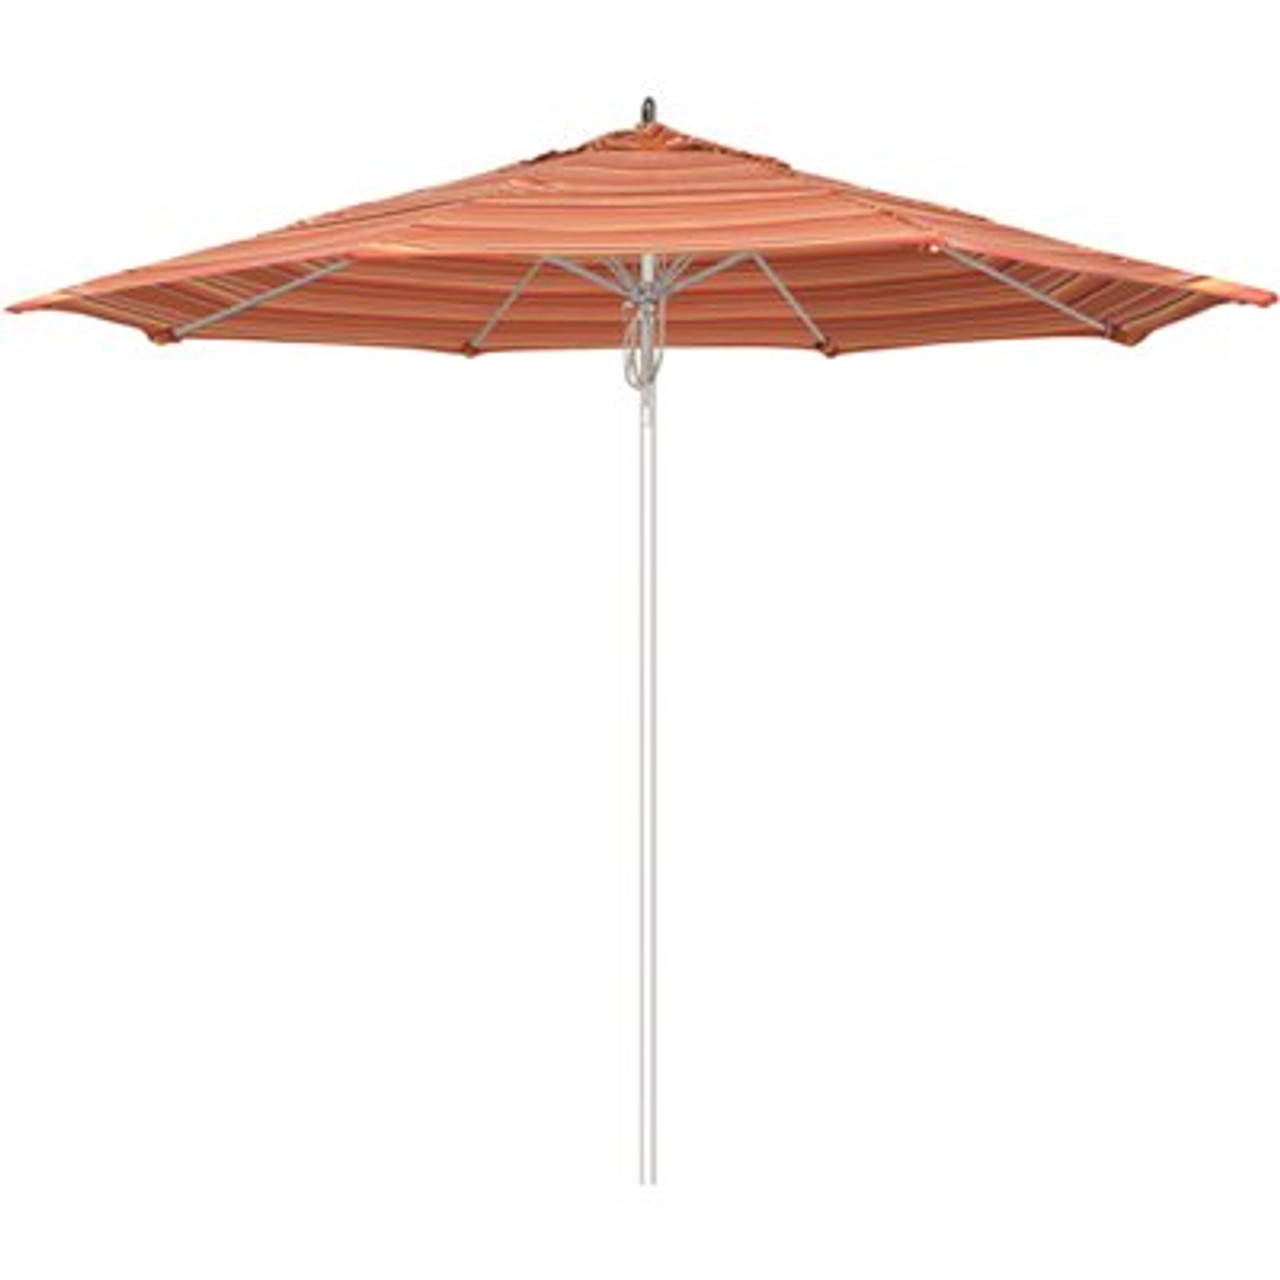 11 ft. Silver Aluminum Commercial Market Patio Umbrella Fiberglass Ribs and Pulley Lift in Dolce Mango Sunbrella